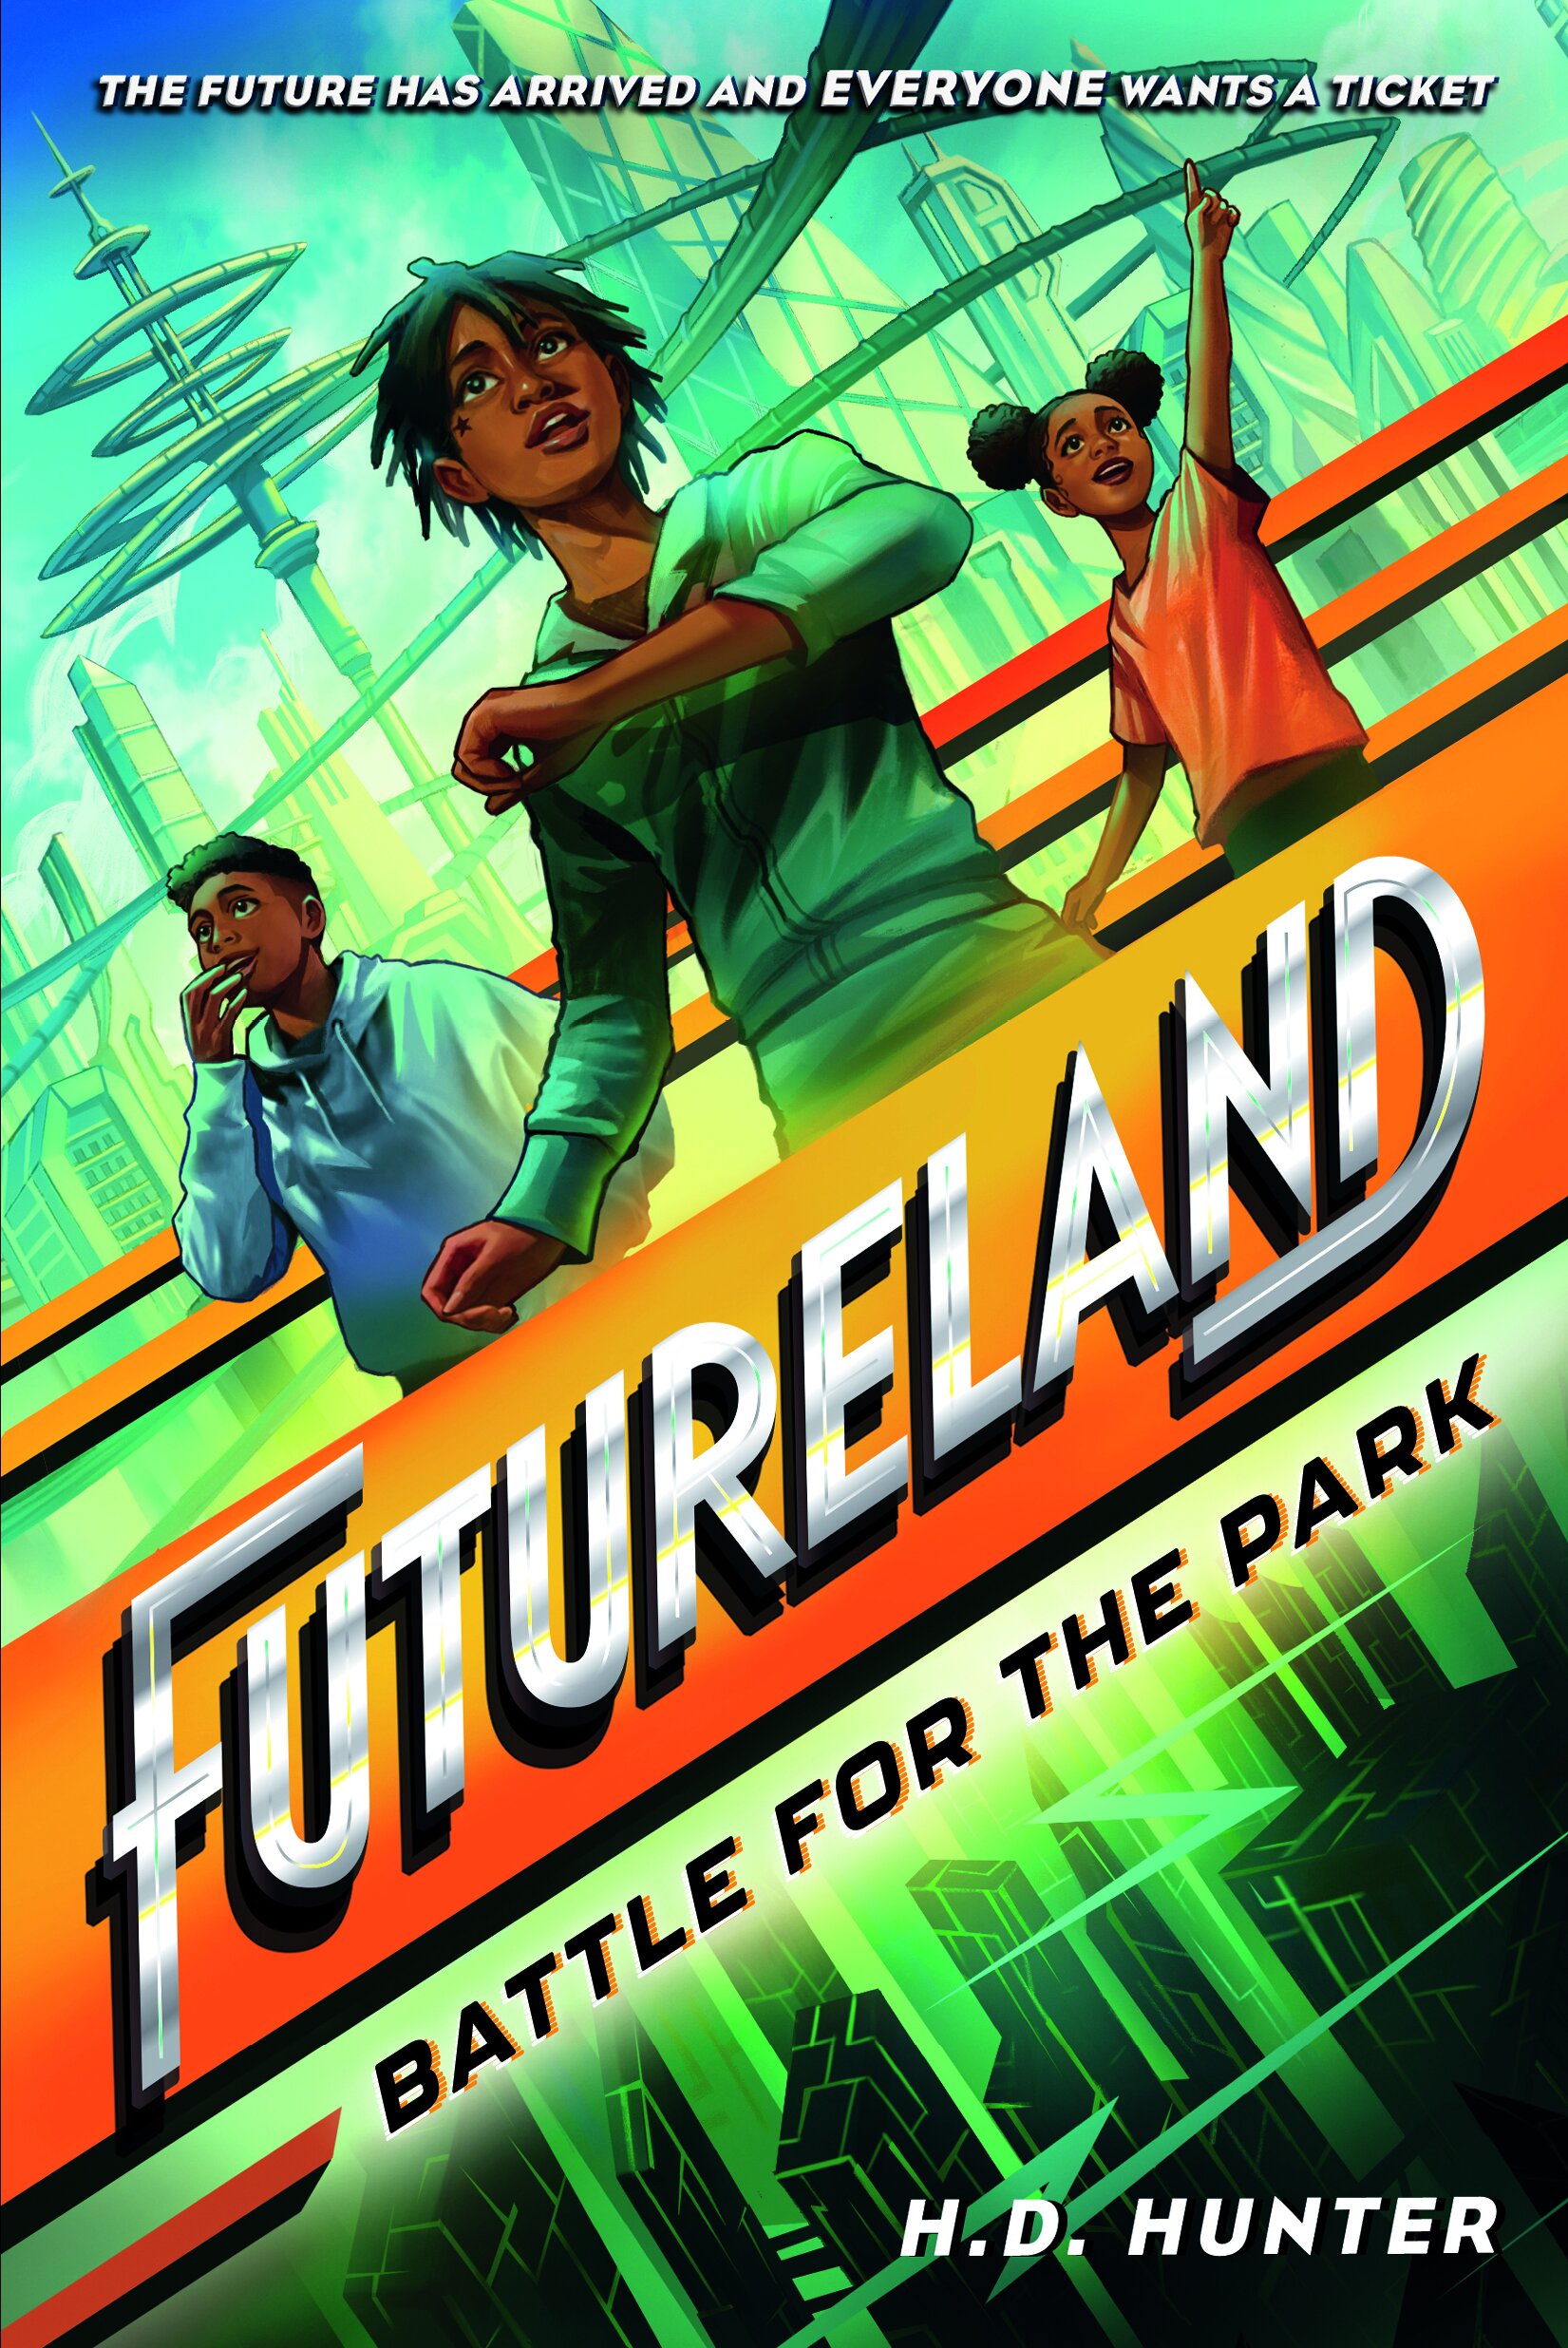 Futureland Cover 2.23.22 (1).jpeg